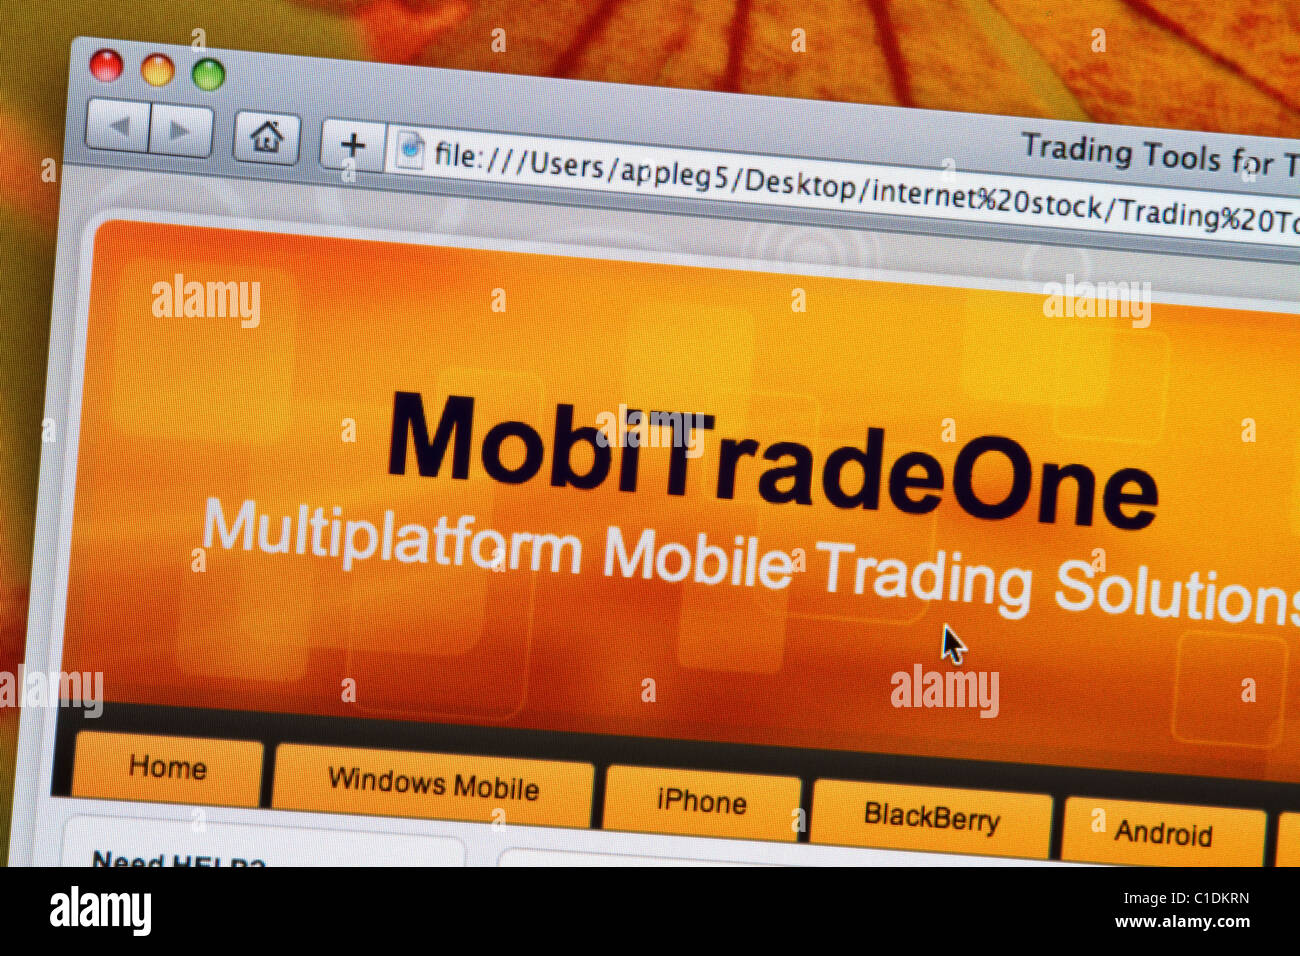 Mobile Trade One website for internet stocks trading. Stock Photo